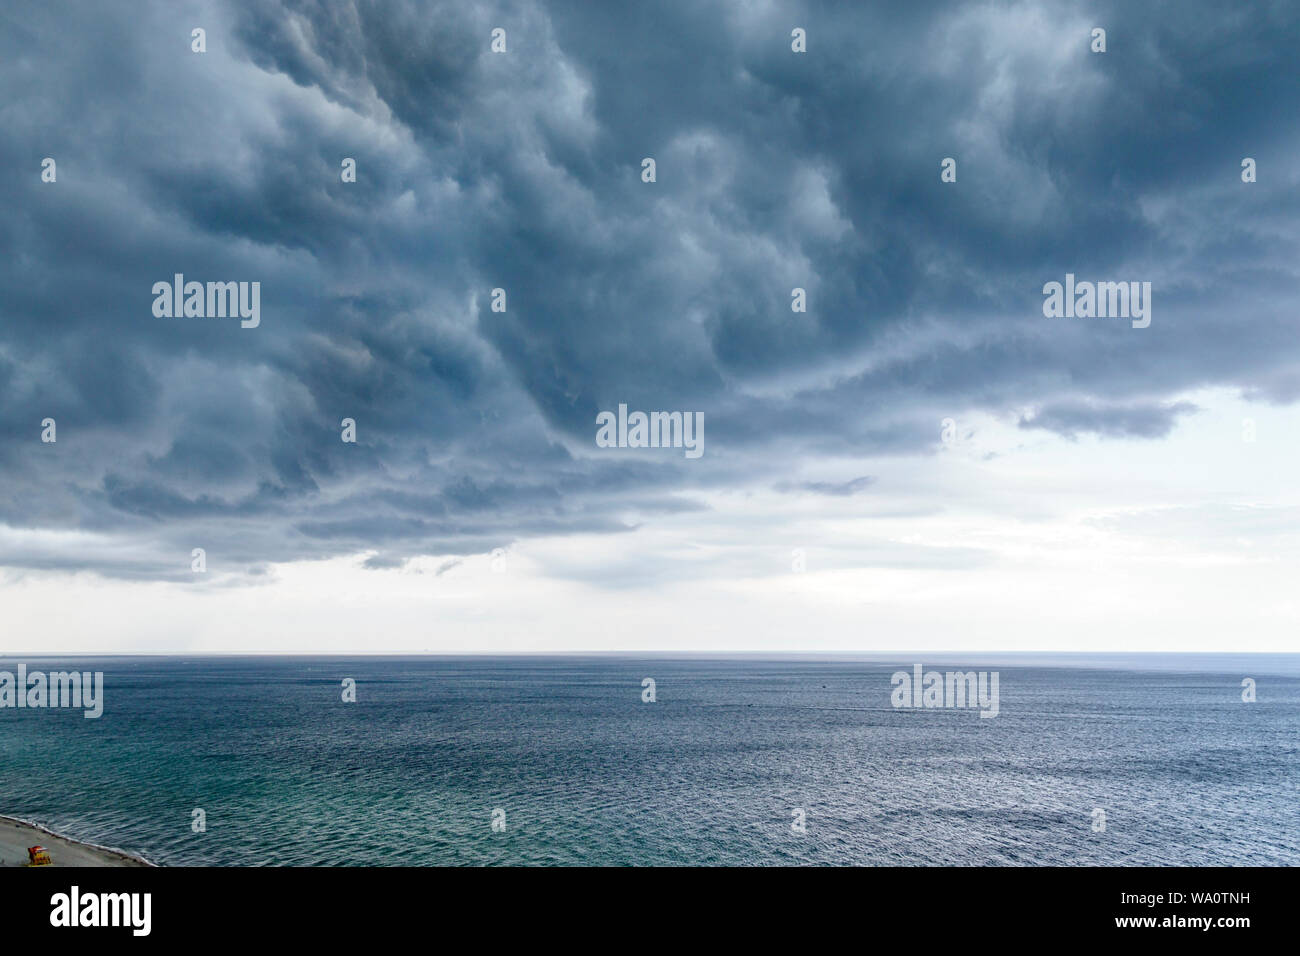 Miami Beach Florida,Atlantic Ocean,clouds weather sky,storm clouds gathering,rain rainclouds,FL190731030 Stock Photo